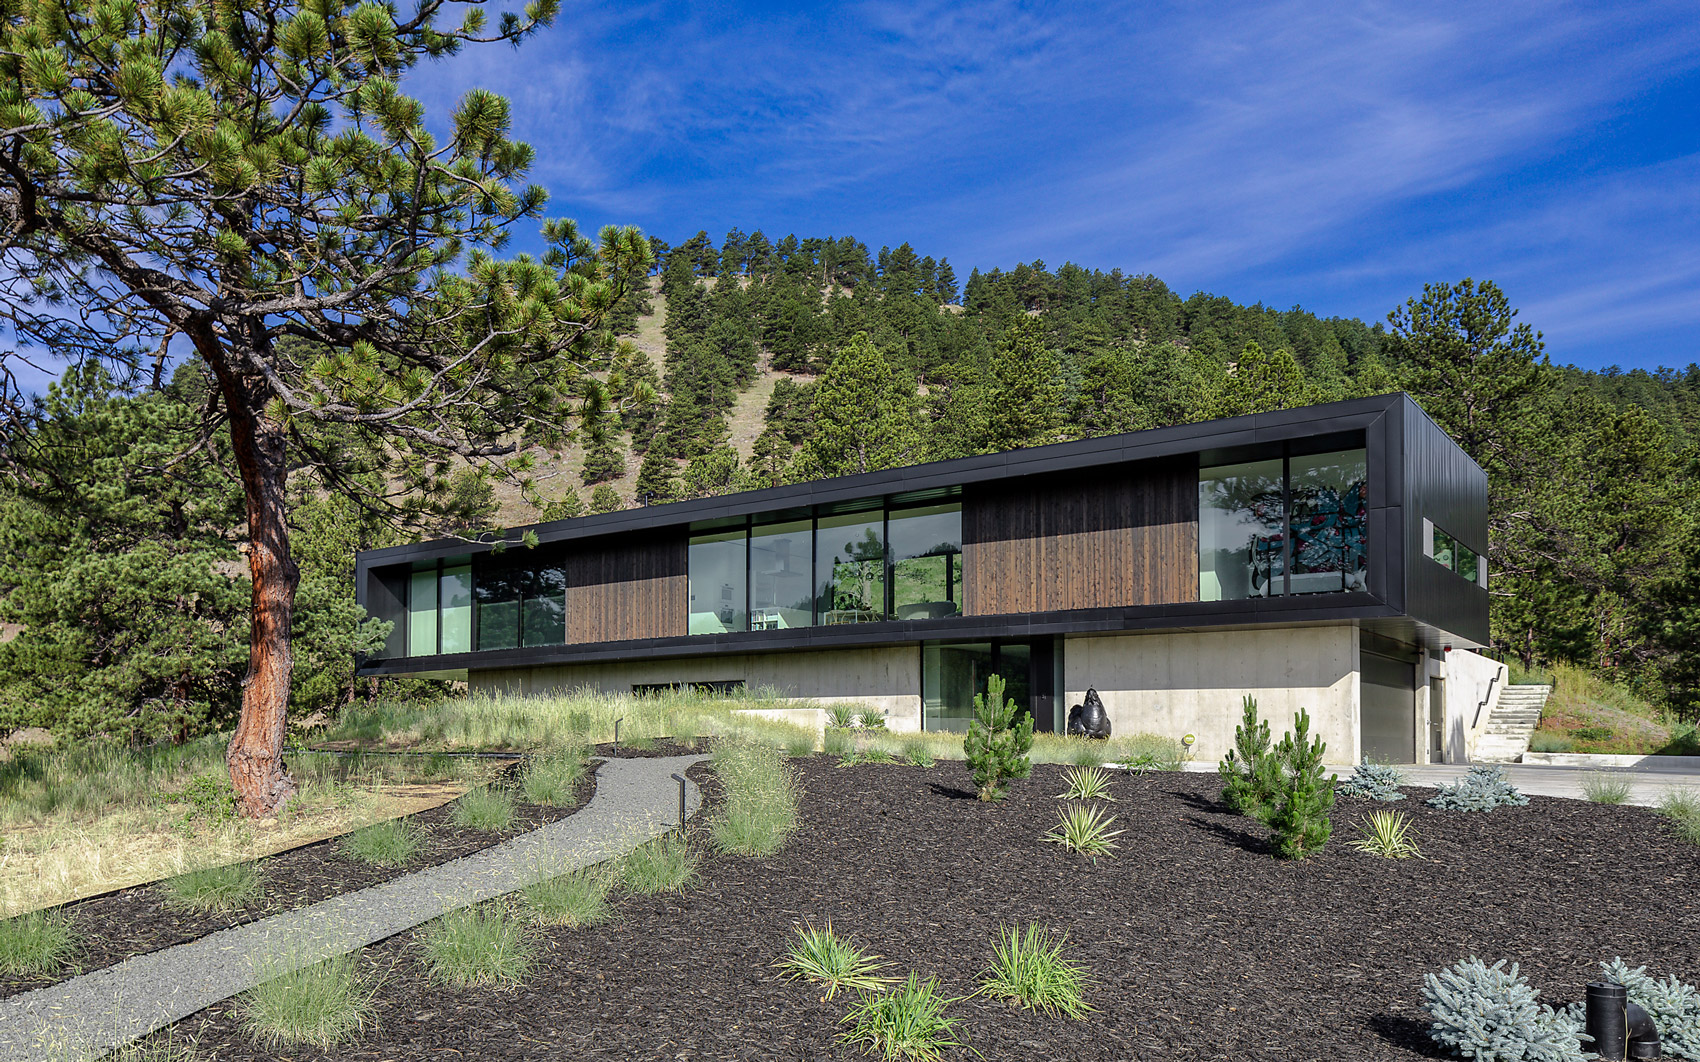 Blur House featuring DUNCAN 2.0 shou sugi ban charred western red cedar exterior cladding/siding